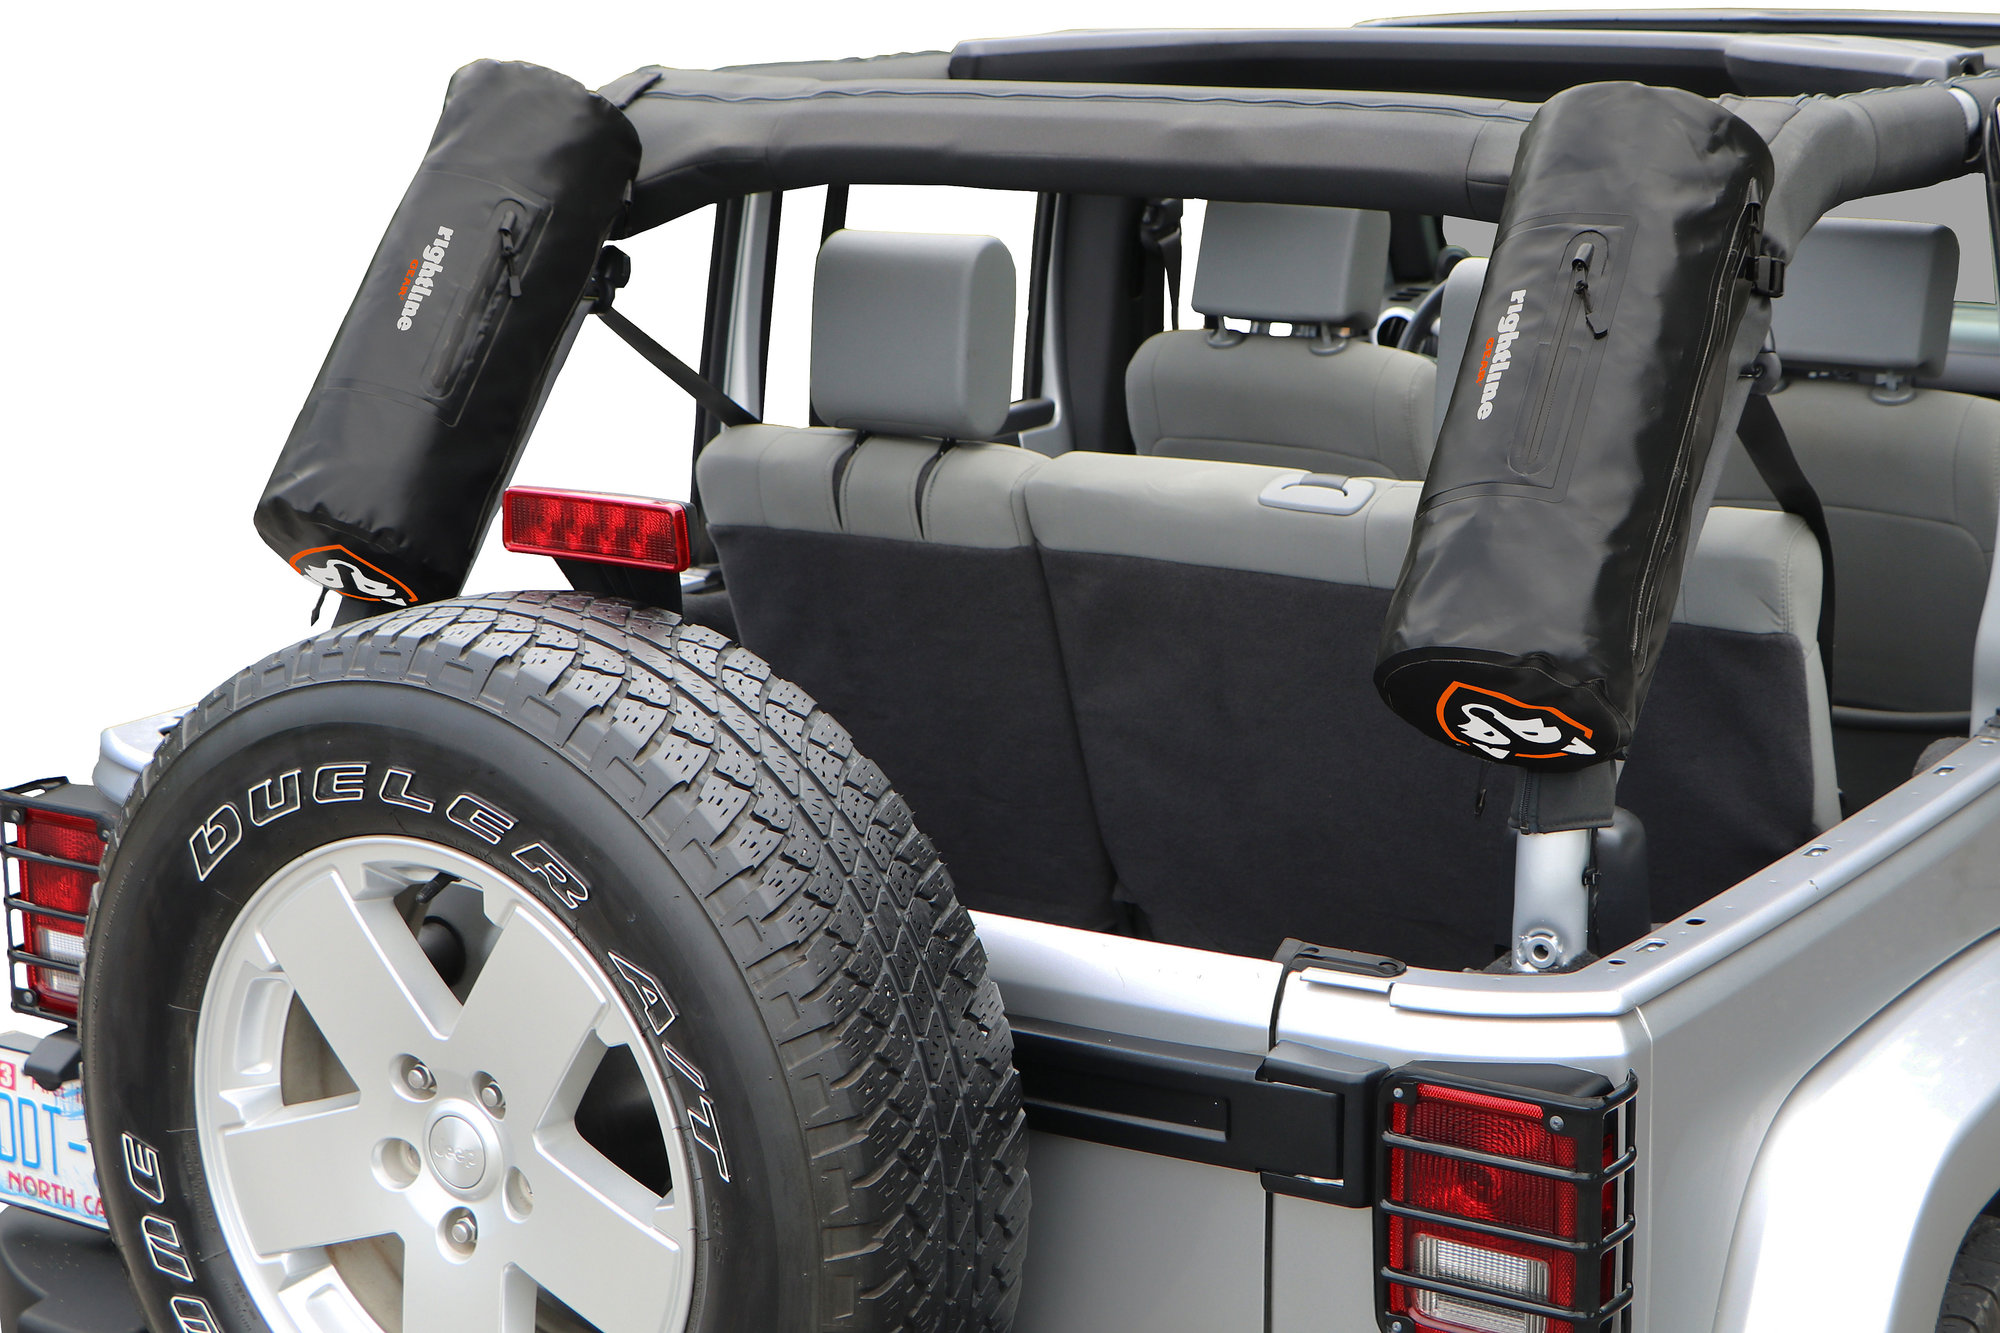 Rightline Gear 4x4 Roll Bar Storage Bag for 5521 Jeep CJ Vehicles